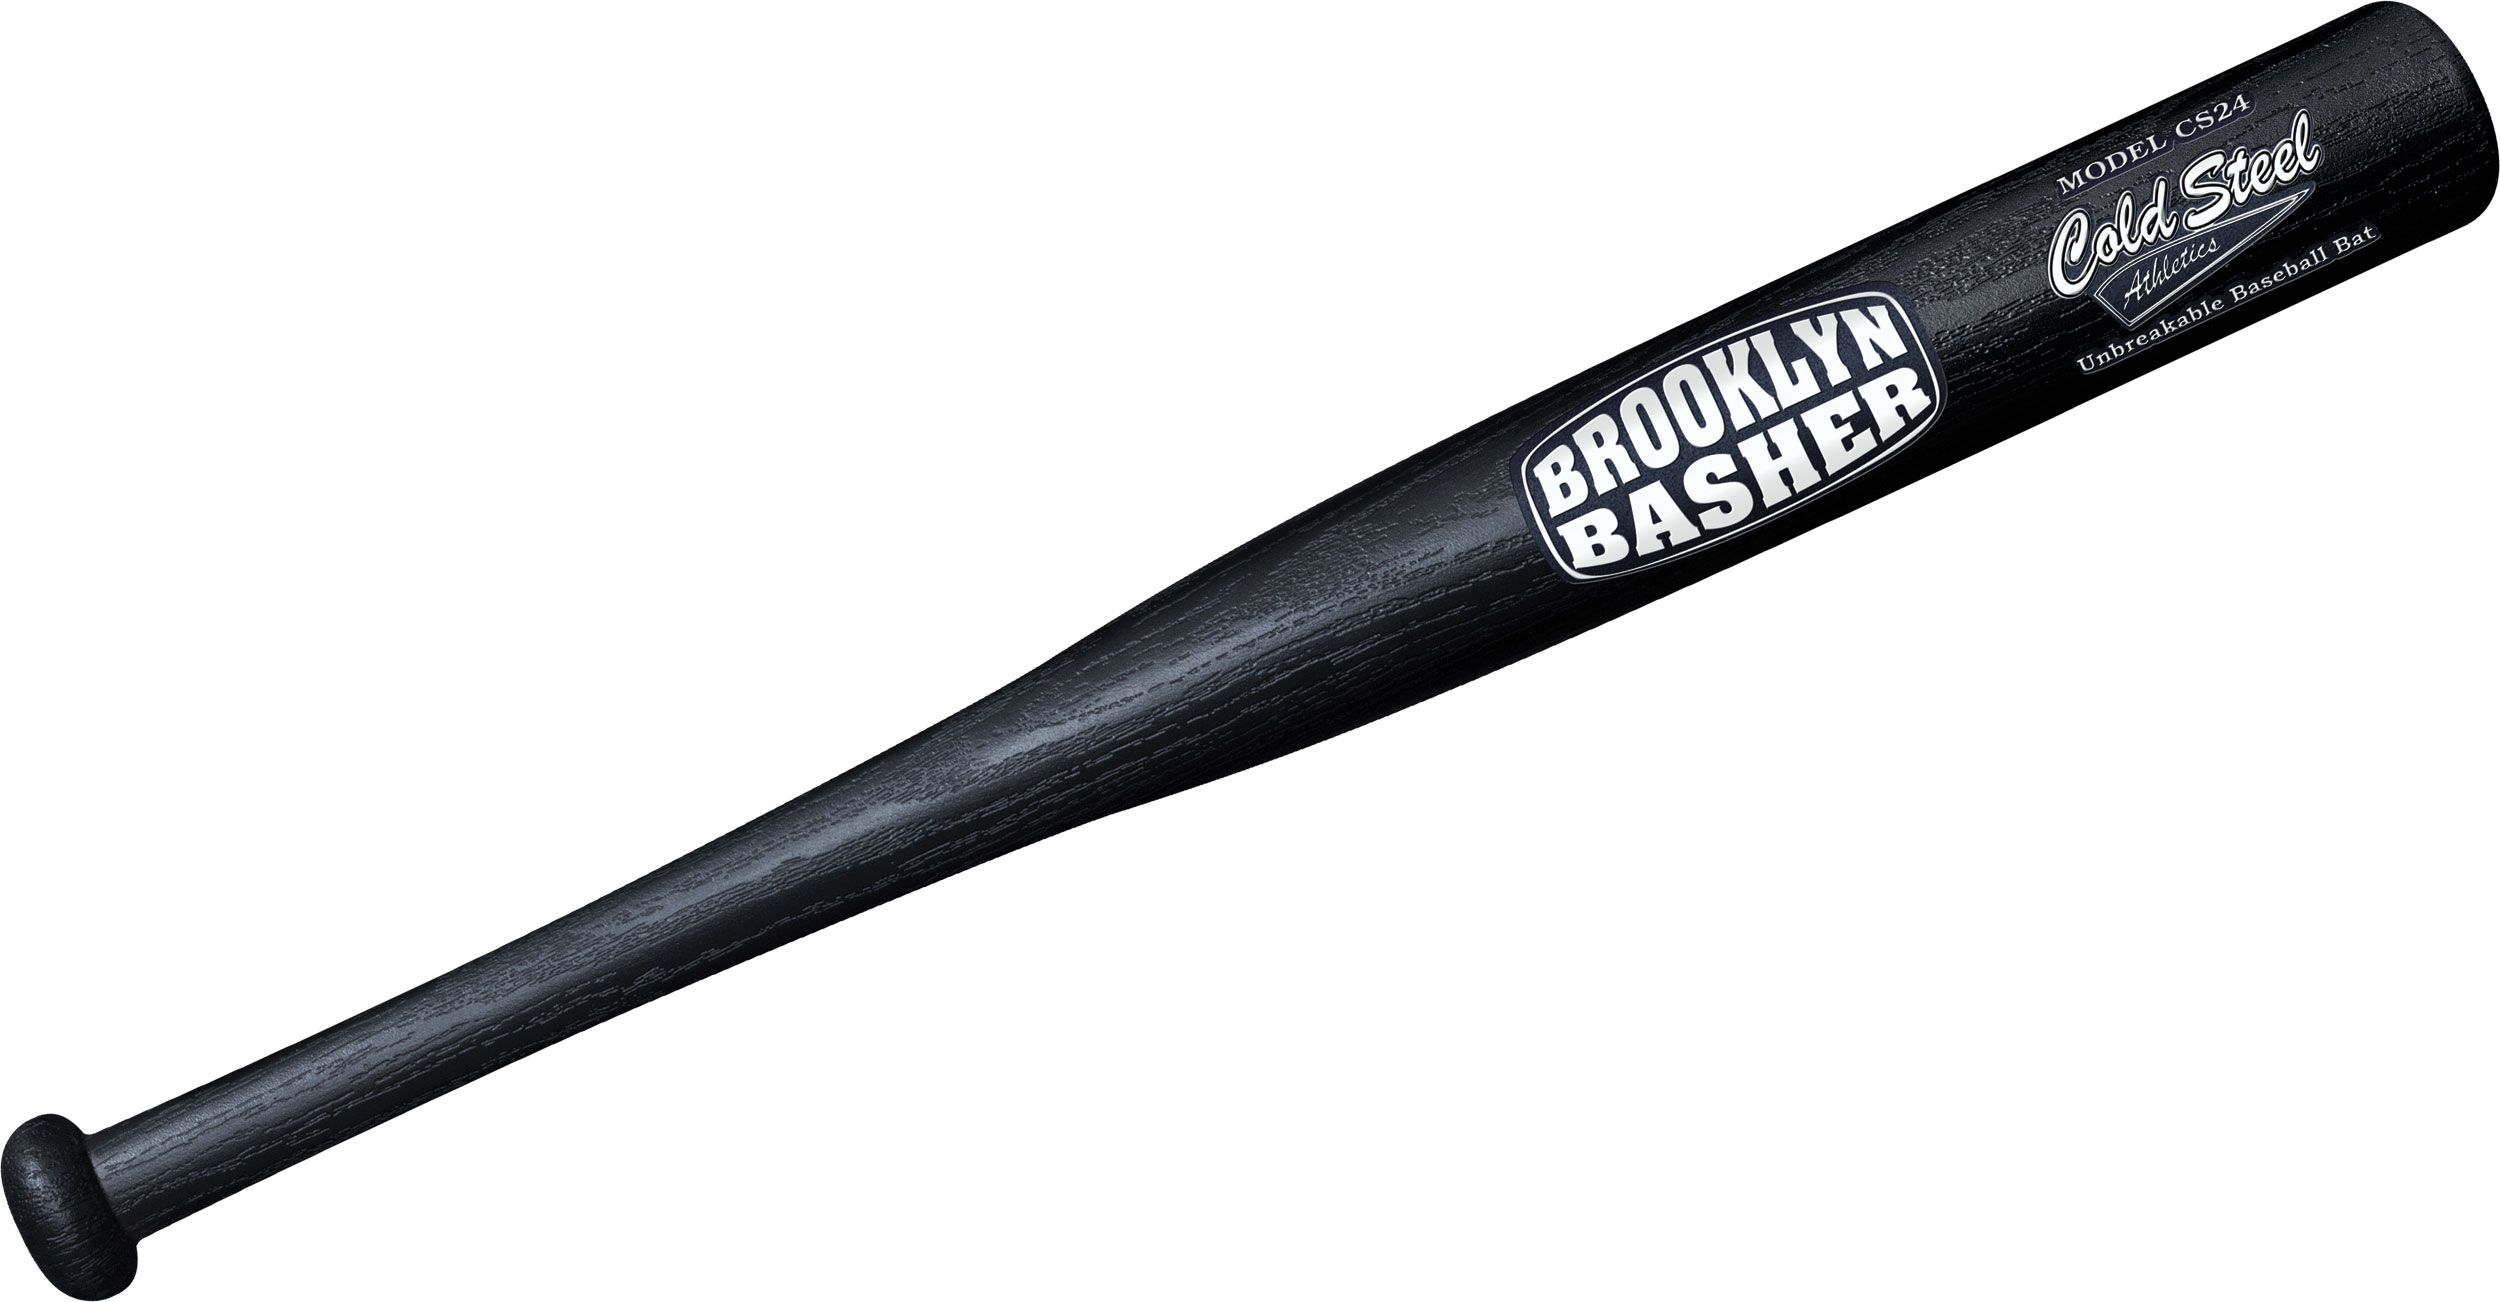 48,99€/1Stk Cold Steel Baseballschläger Brooklyn Banshee 92BSU 